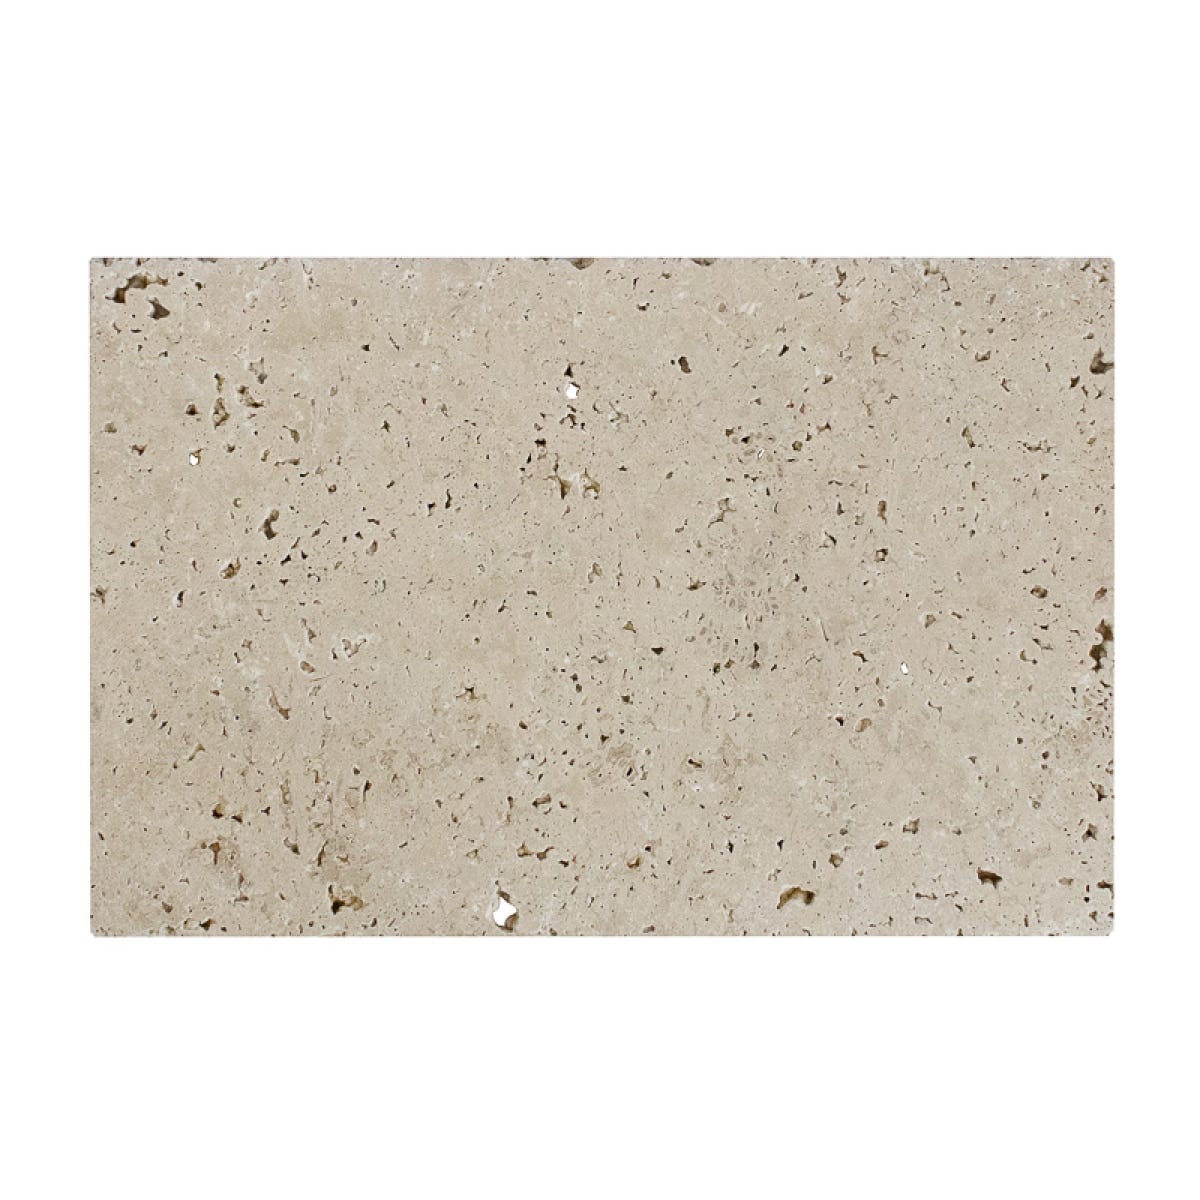 Travertin pierre naturelle 2nd choix - Opus Romain - Ep. 1,2cm (vendu au m²) - Ligerio 4